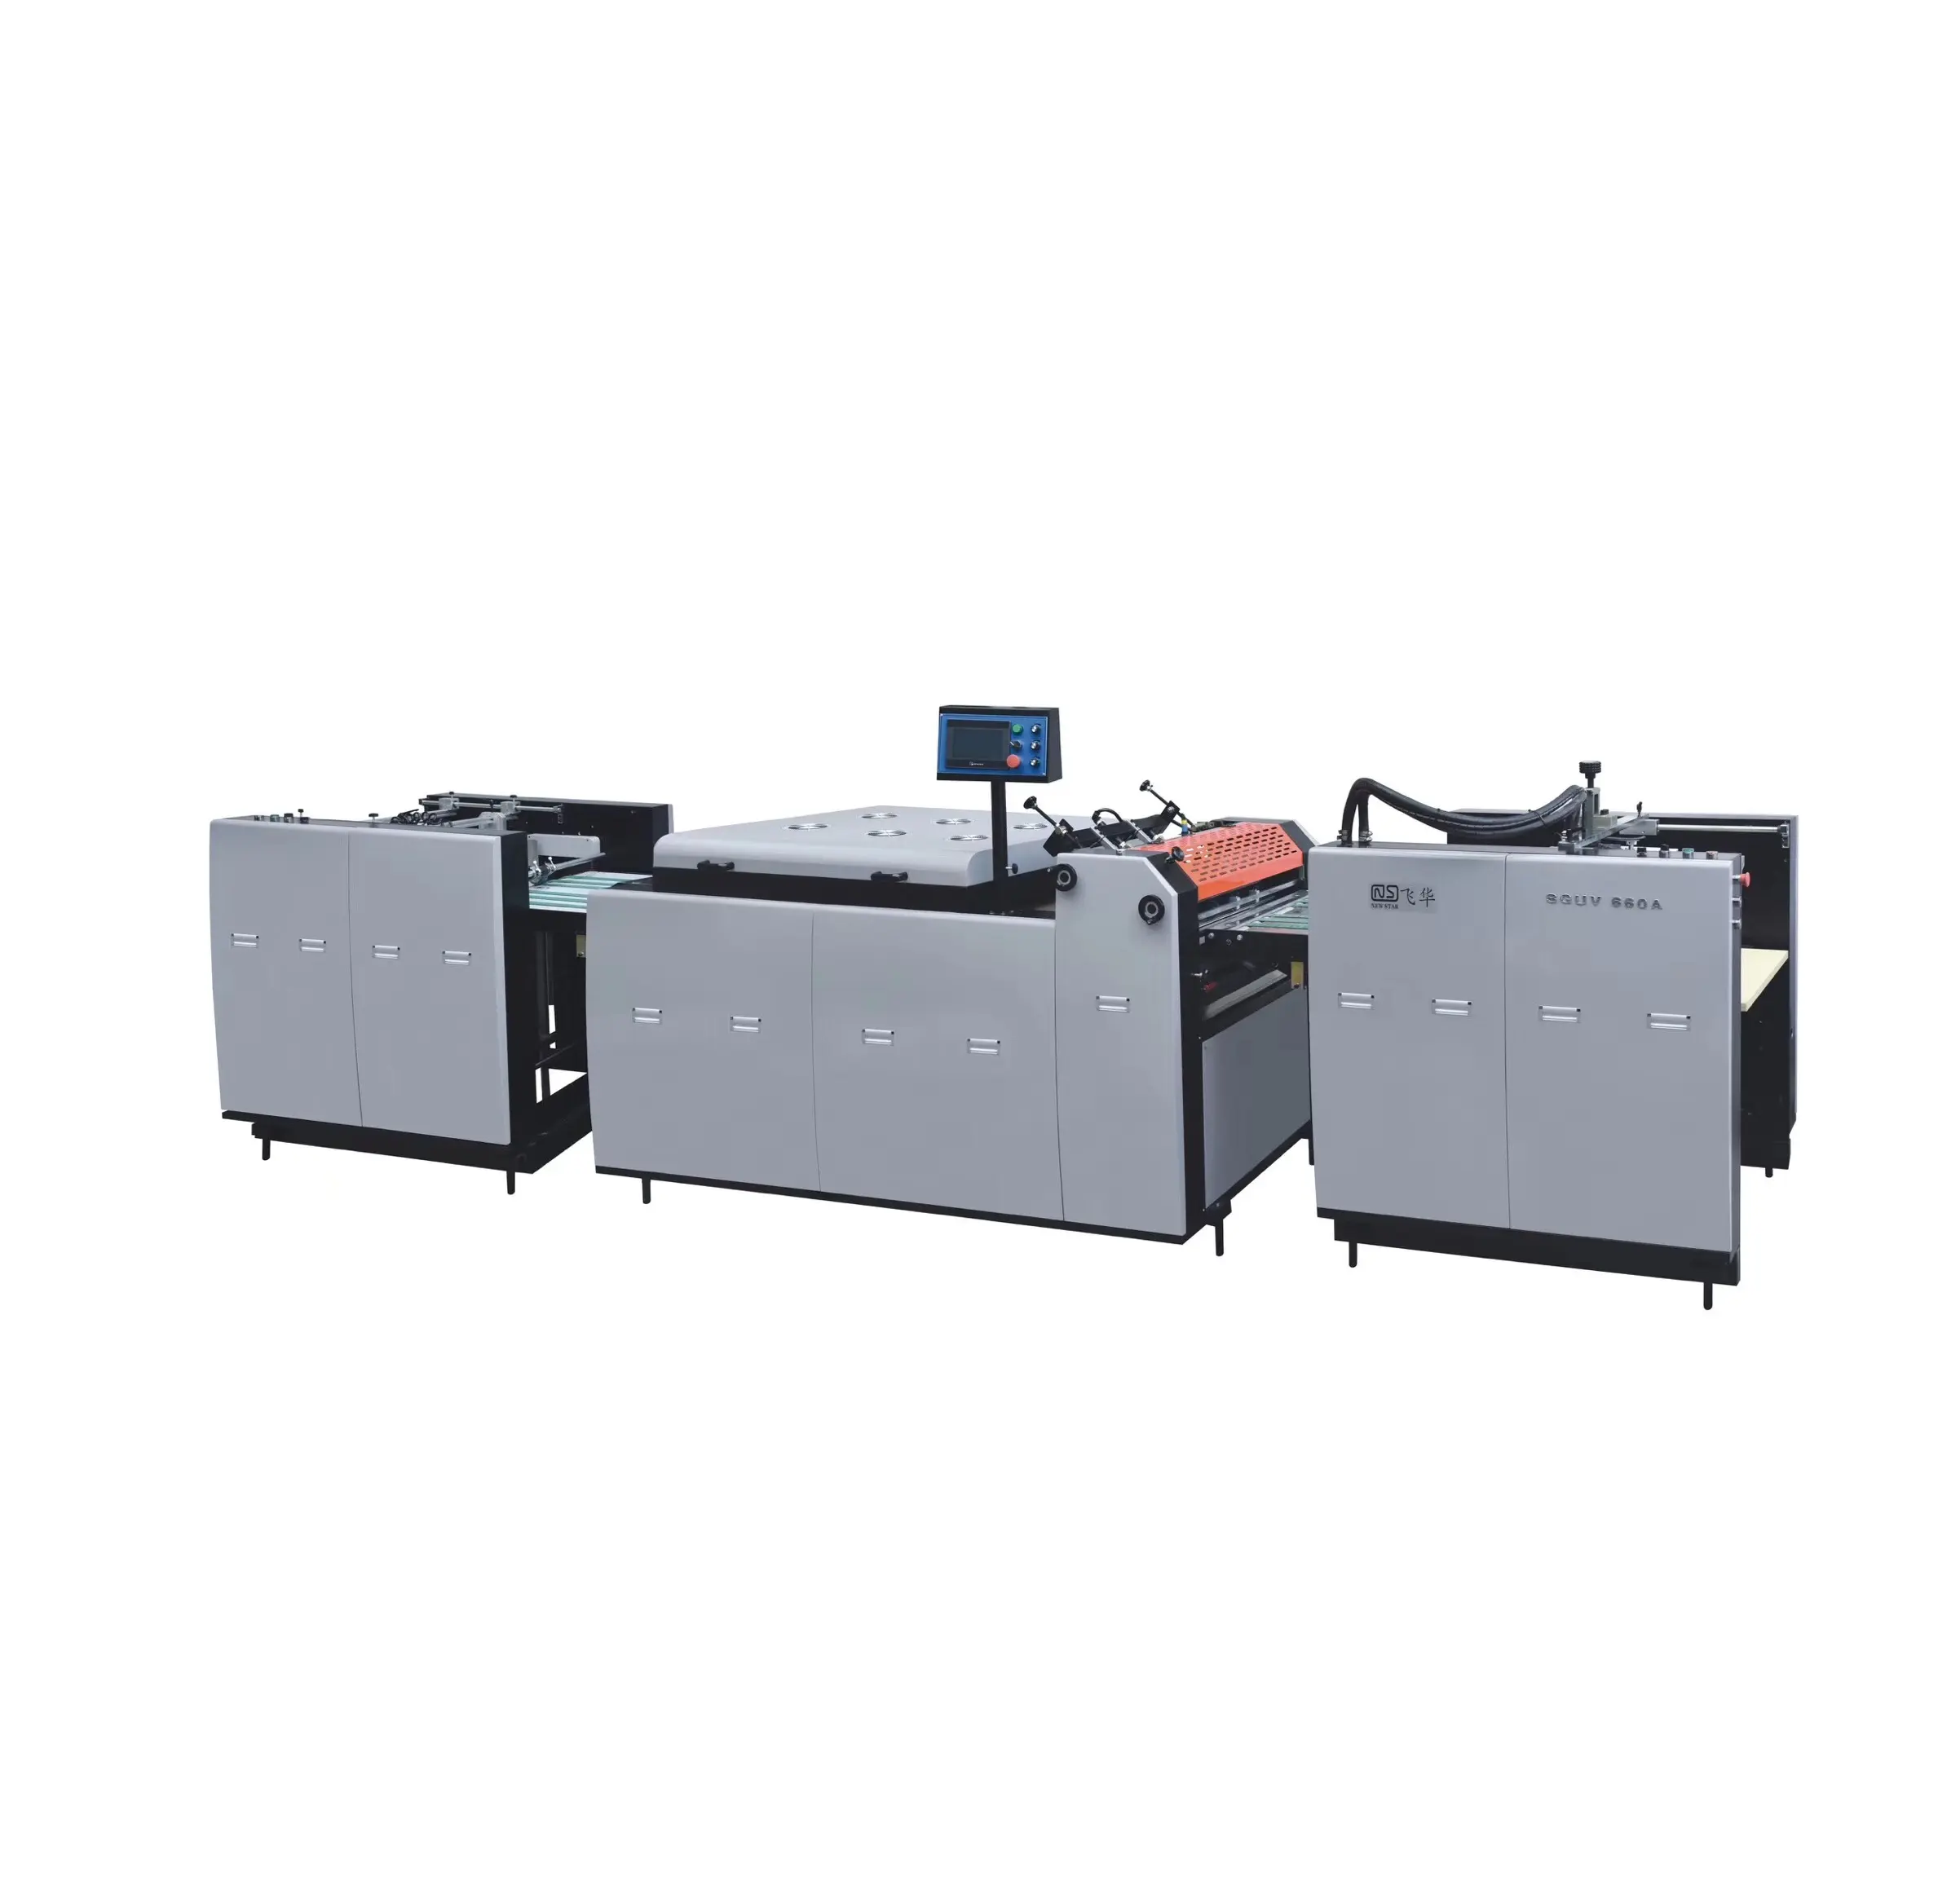 SGUV-660A Papier Automatische UV-Beschichtung Maschine